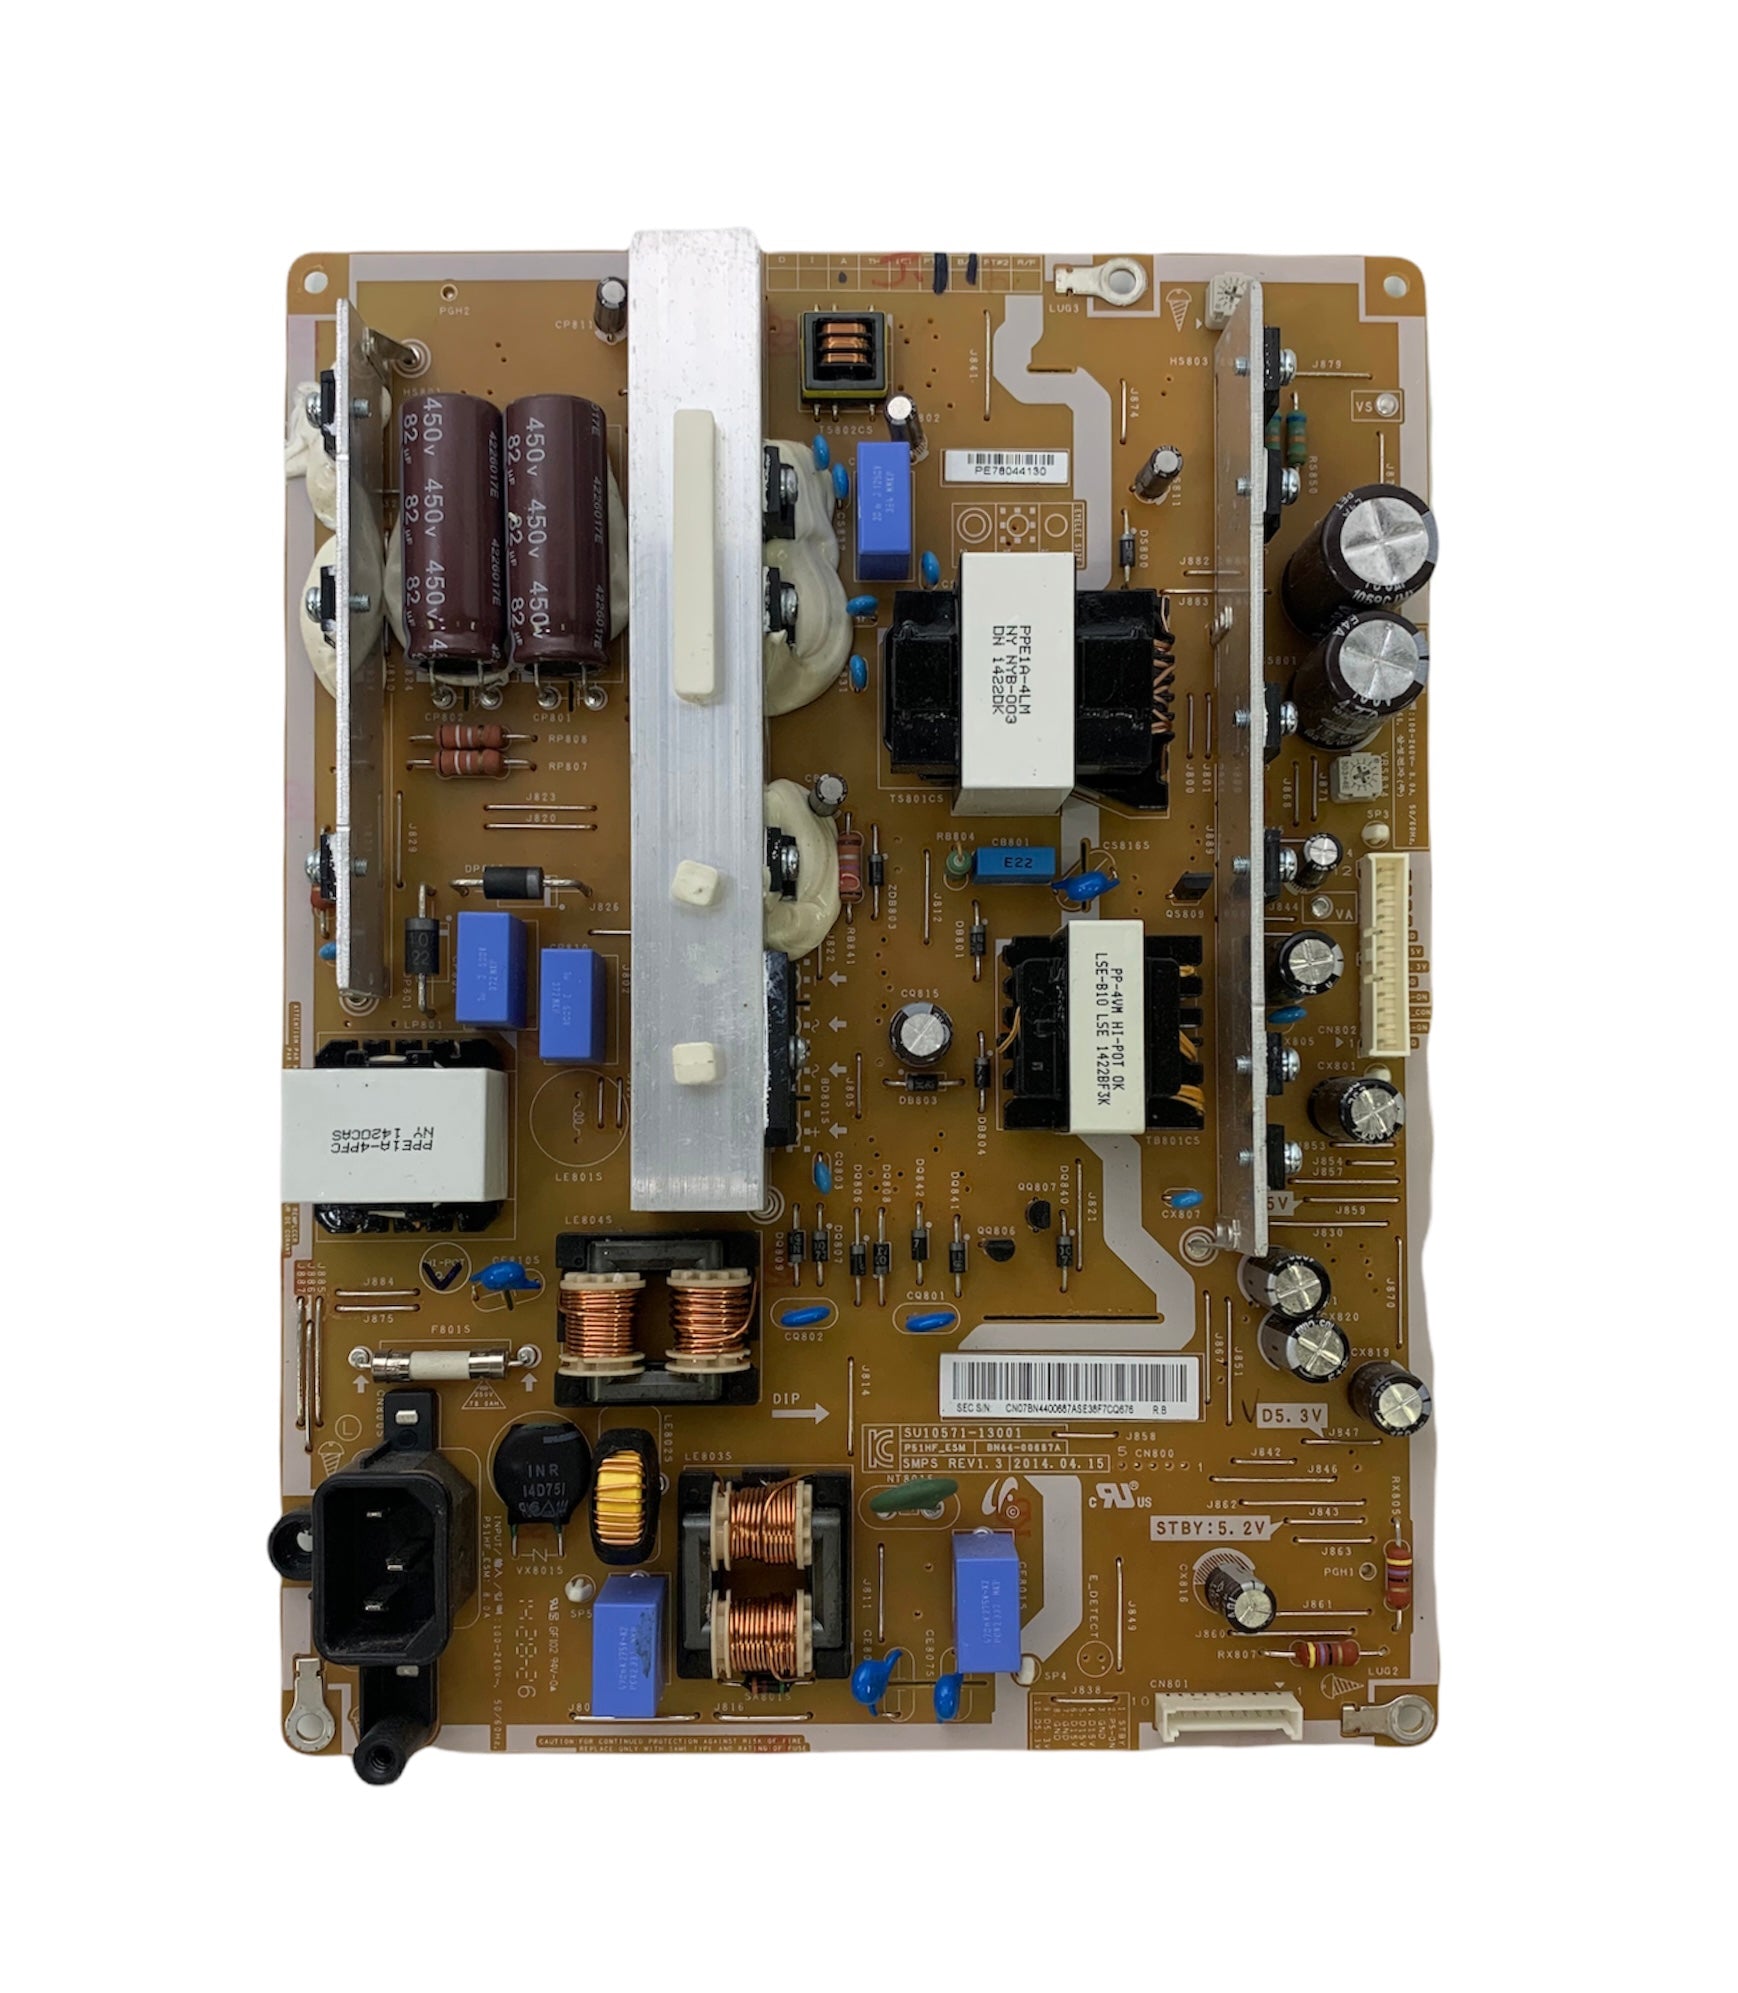 Samsung BN44-00687A Power Supply Unit